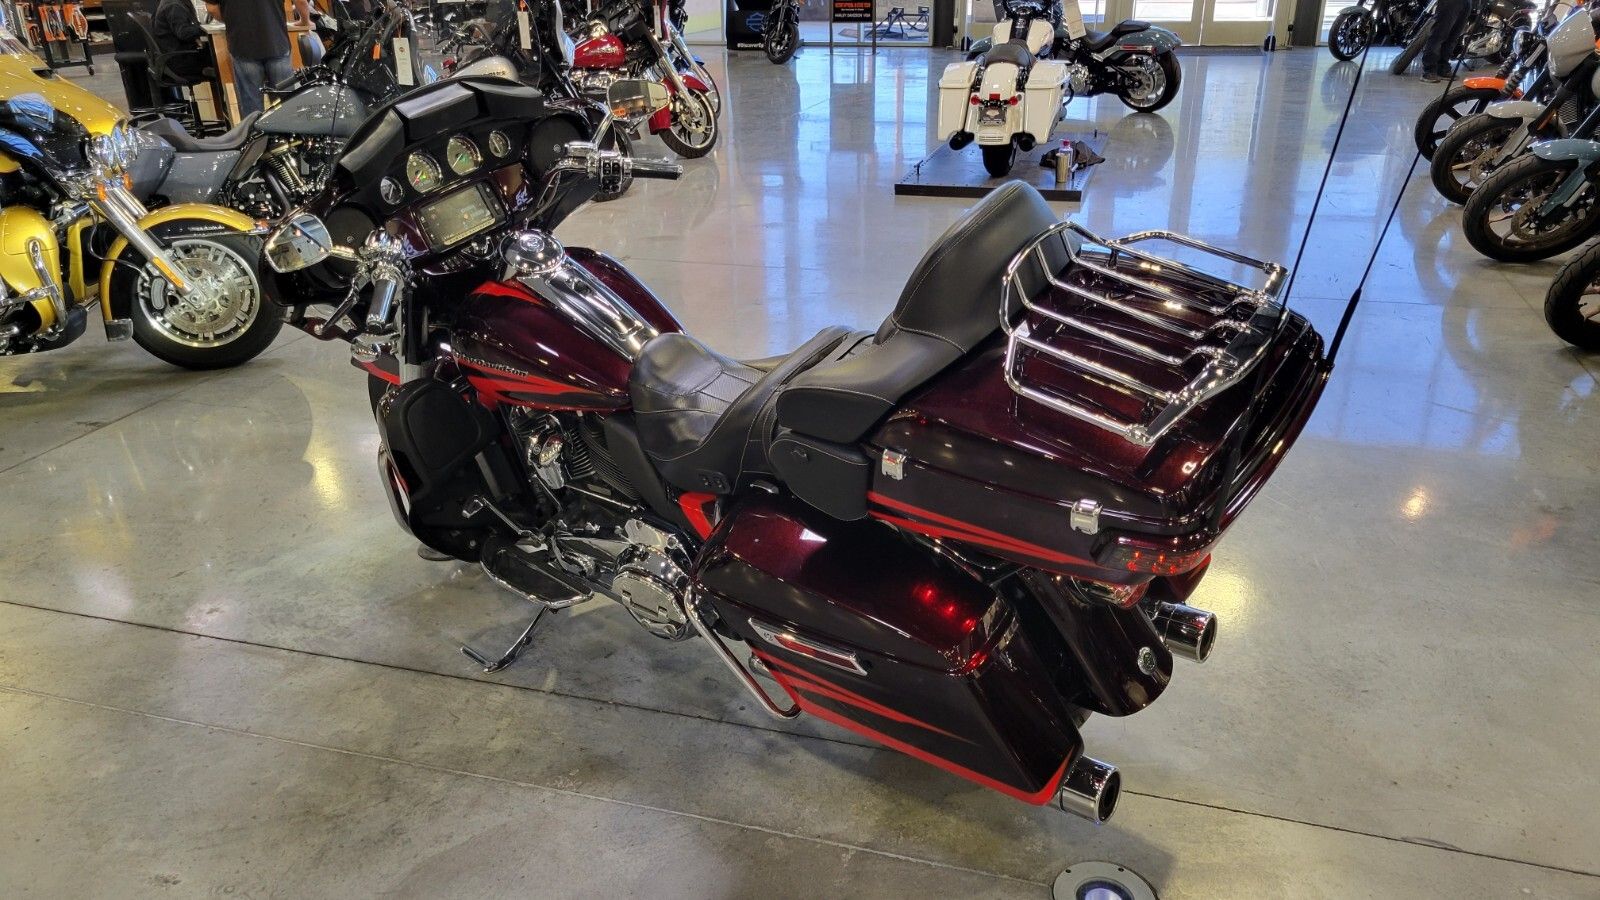 2017 Harley-Davidson CVO™ Limited in Las Vegas, Nevada - Photo 8